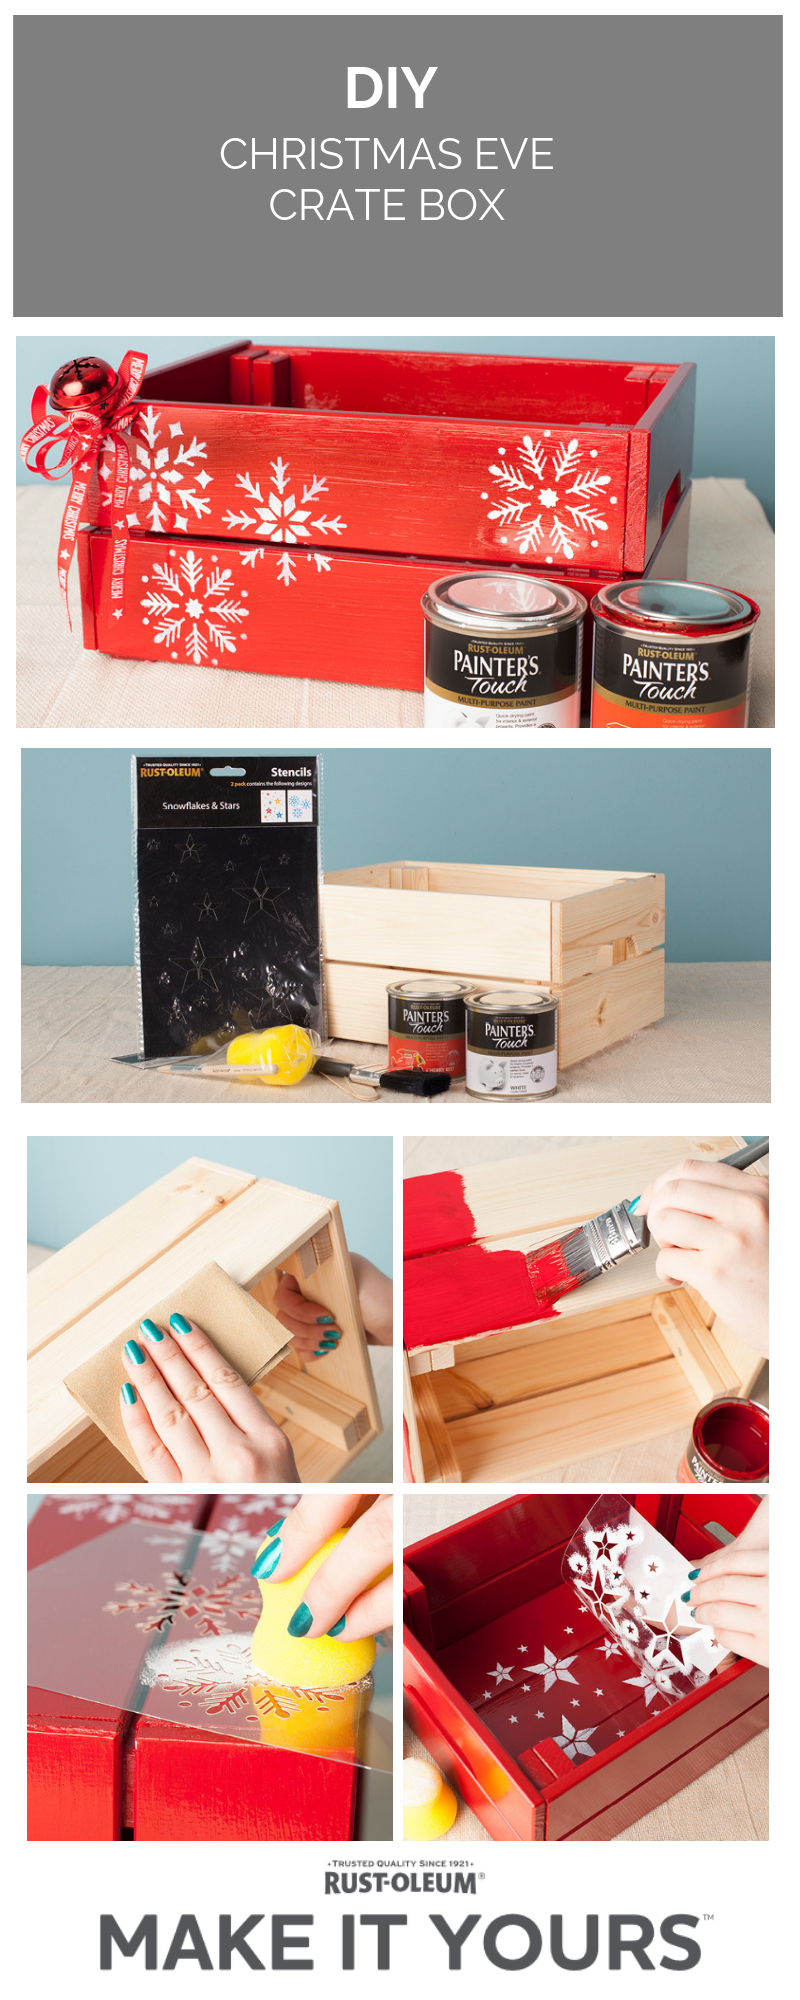 DIY Christmas Eve Crate Box - DIY Christmas Eve Crate Box -   19 diy Christmas box ideas